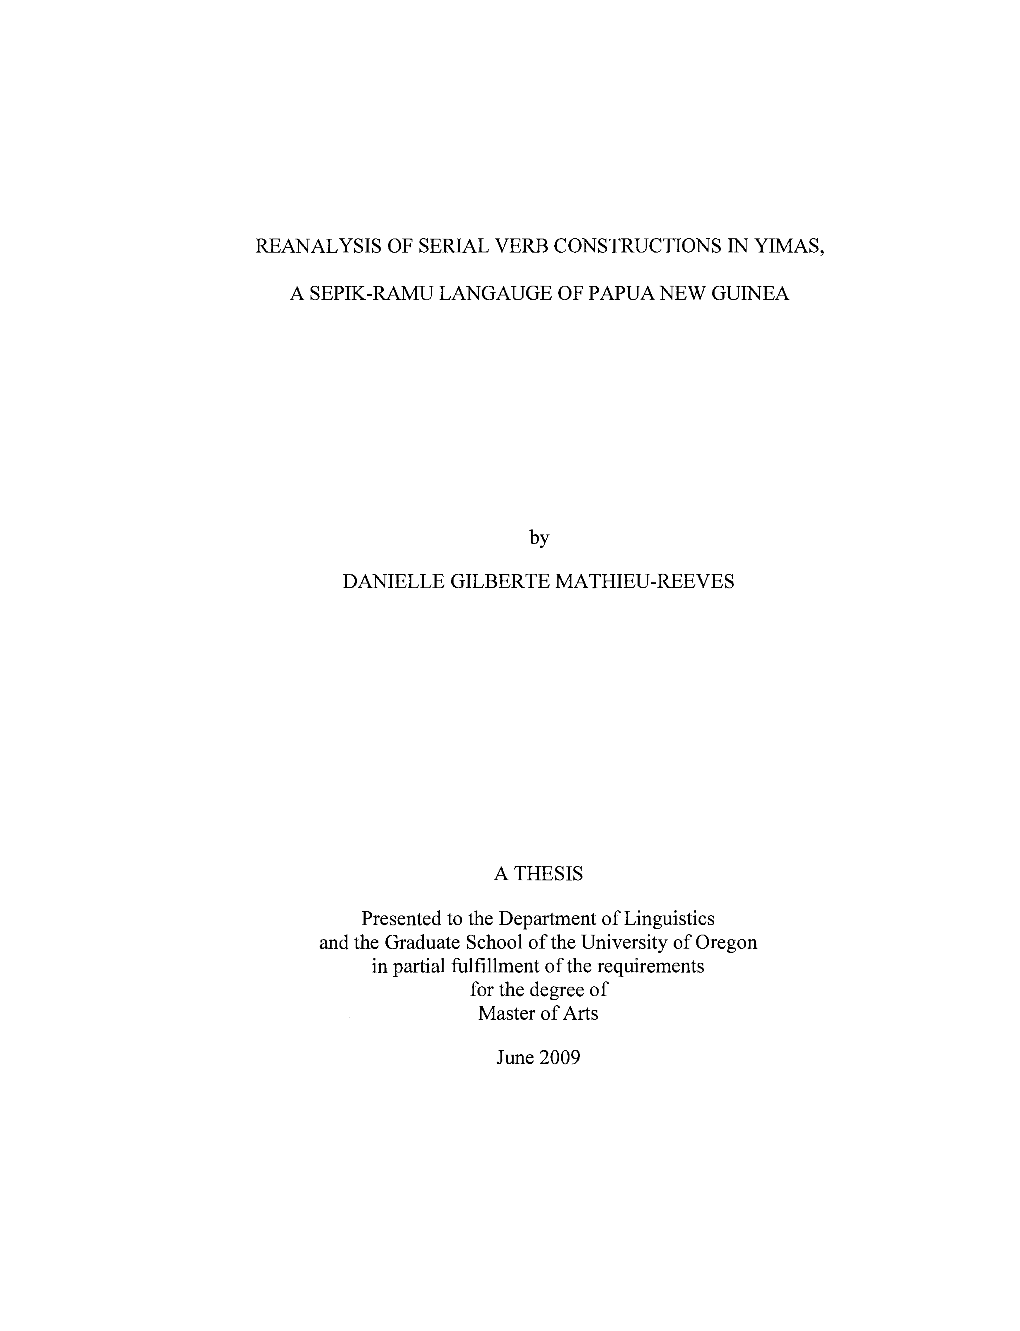 Reanalysis of Serial Verb Constructions in Yimas, a Sepik-Ramu Language Ofpapua